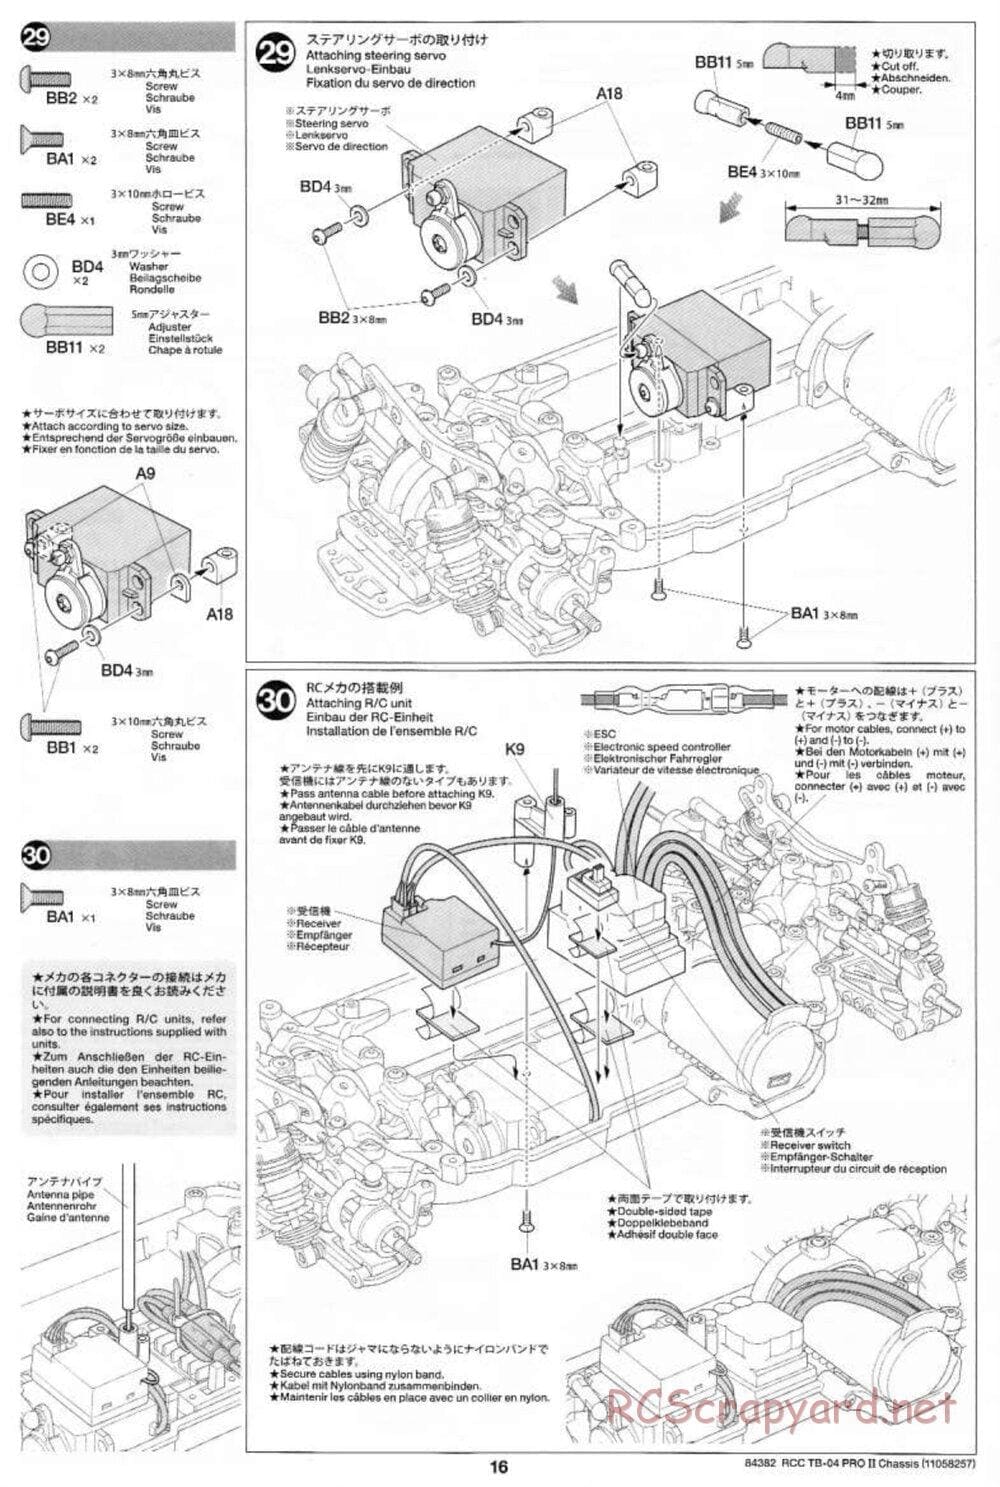 Tamiya - TB-04 Pro II Chassis - Manual - Page 16